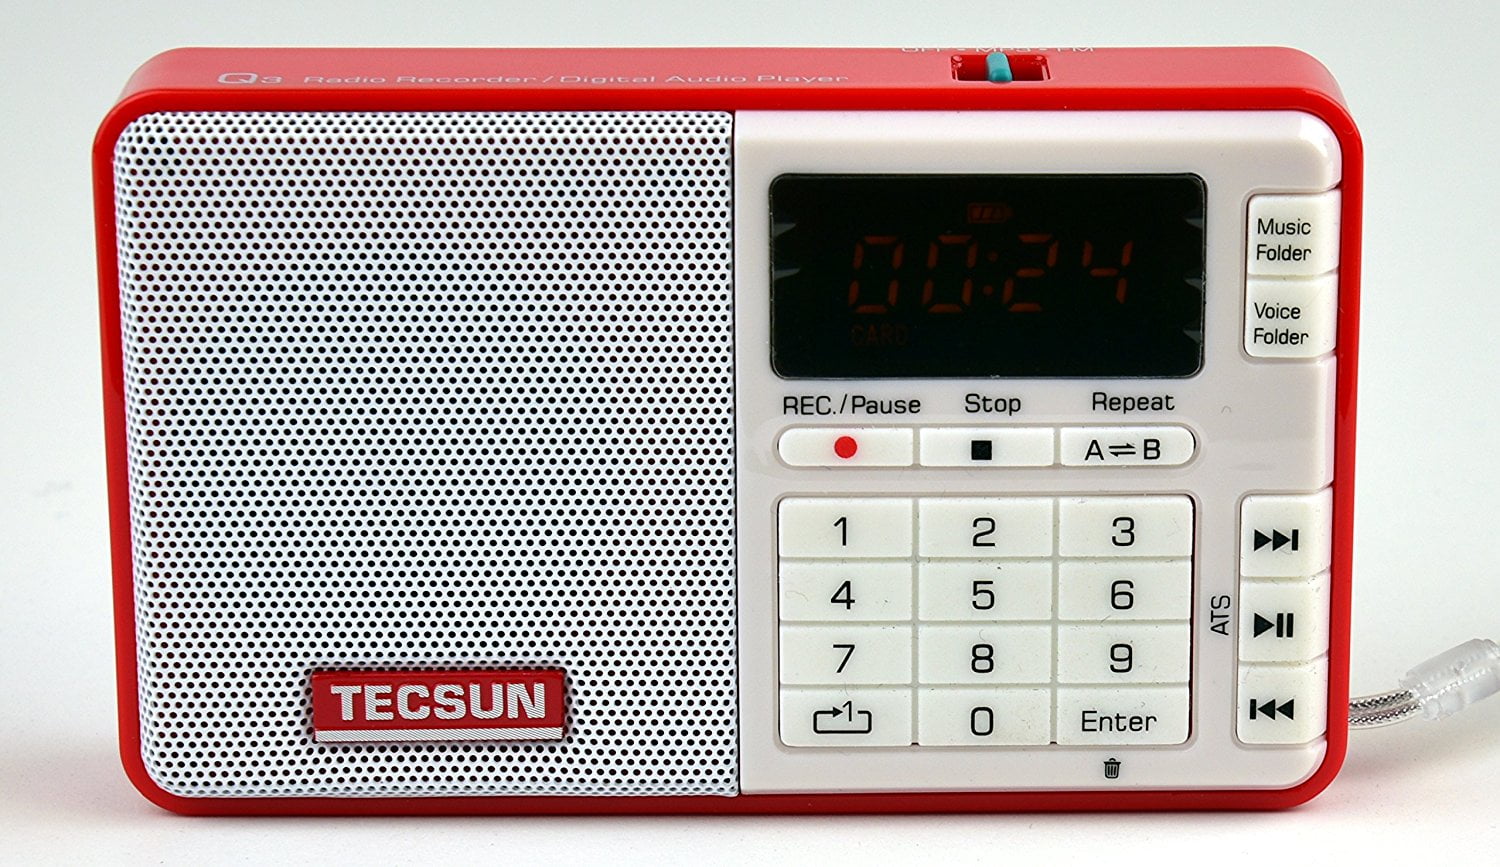 Black Tecsun Q3 High Sound Quality FM Radio with MP3 Player and Recorder 